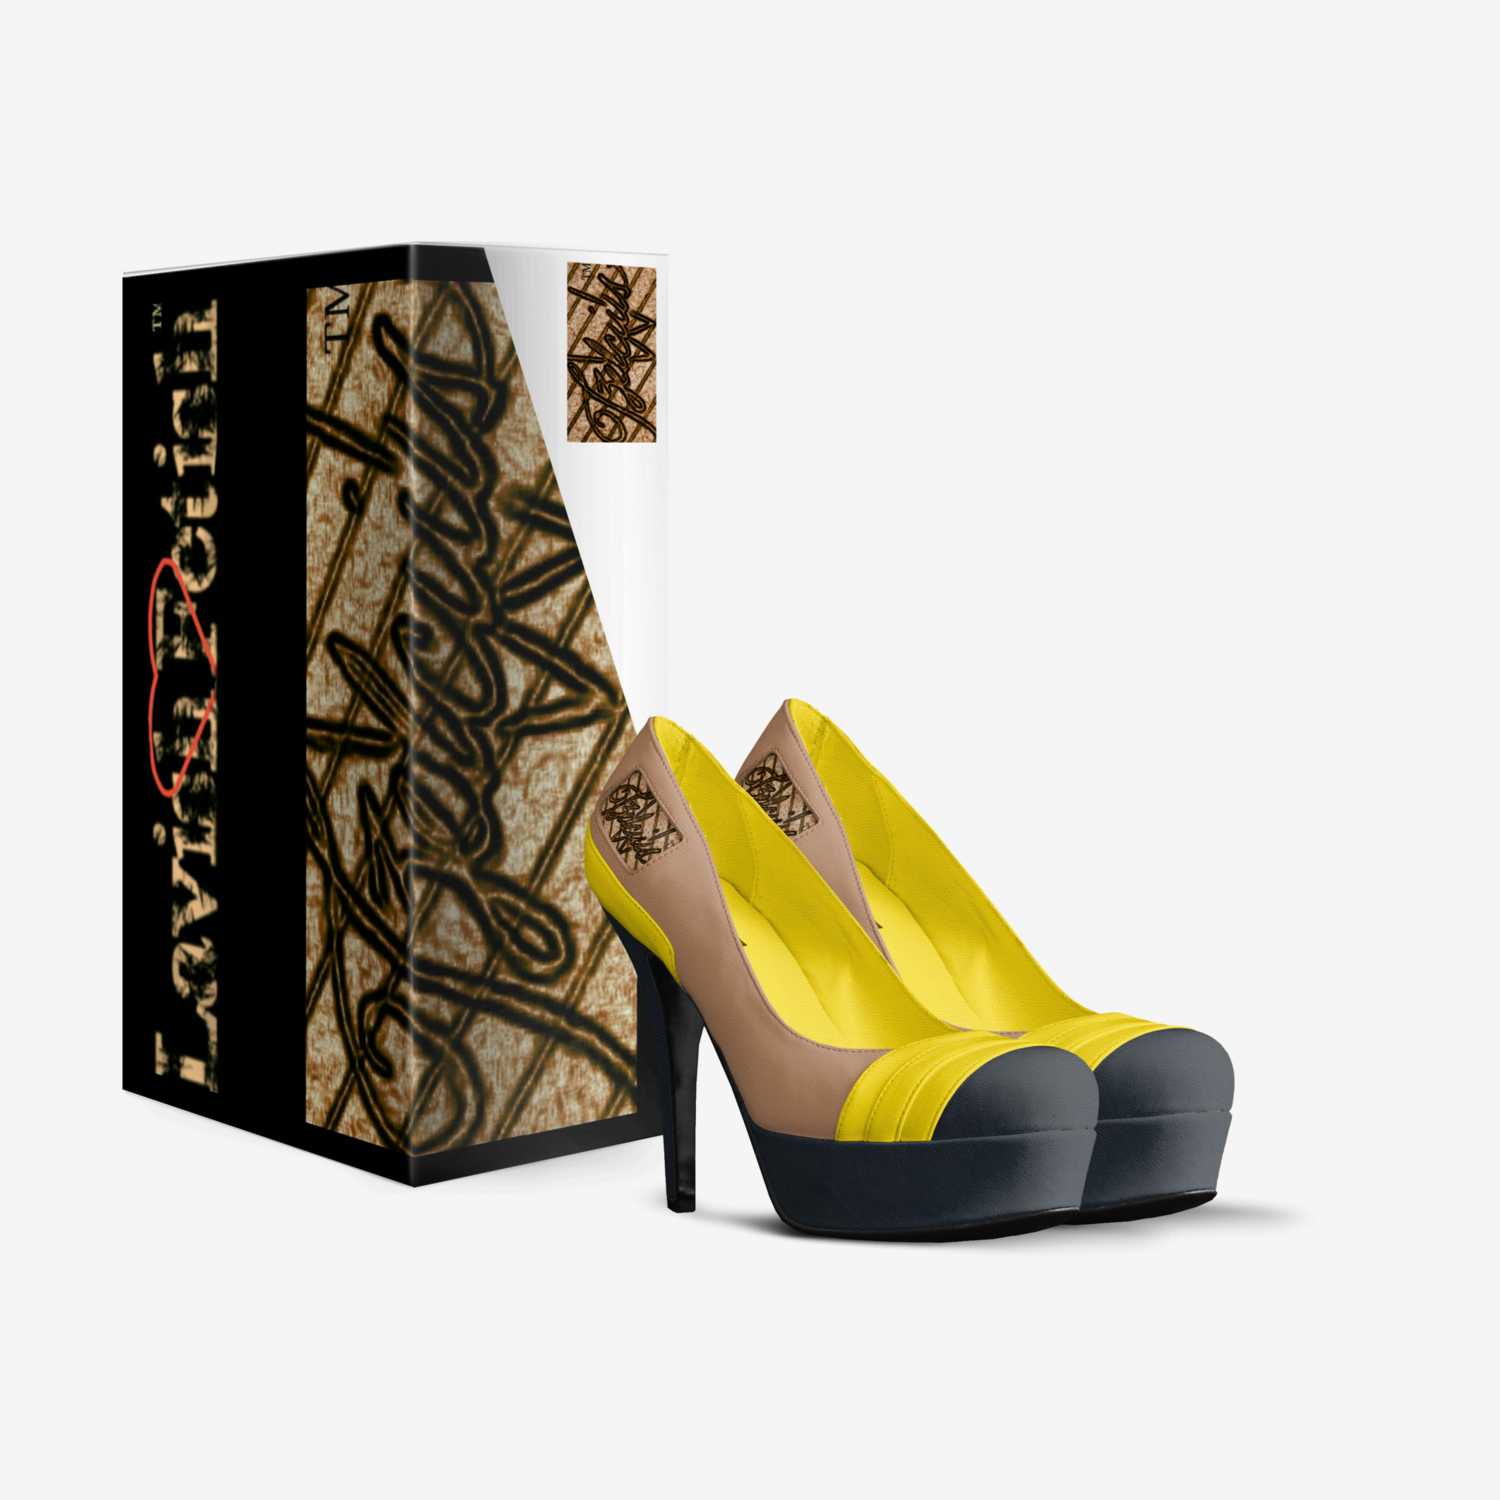 Lavish Fetish custom made in Italy shoes by Carolyn Wilks | Box view